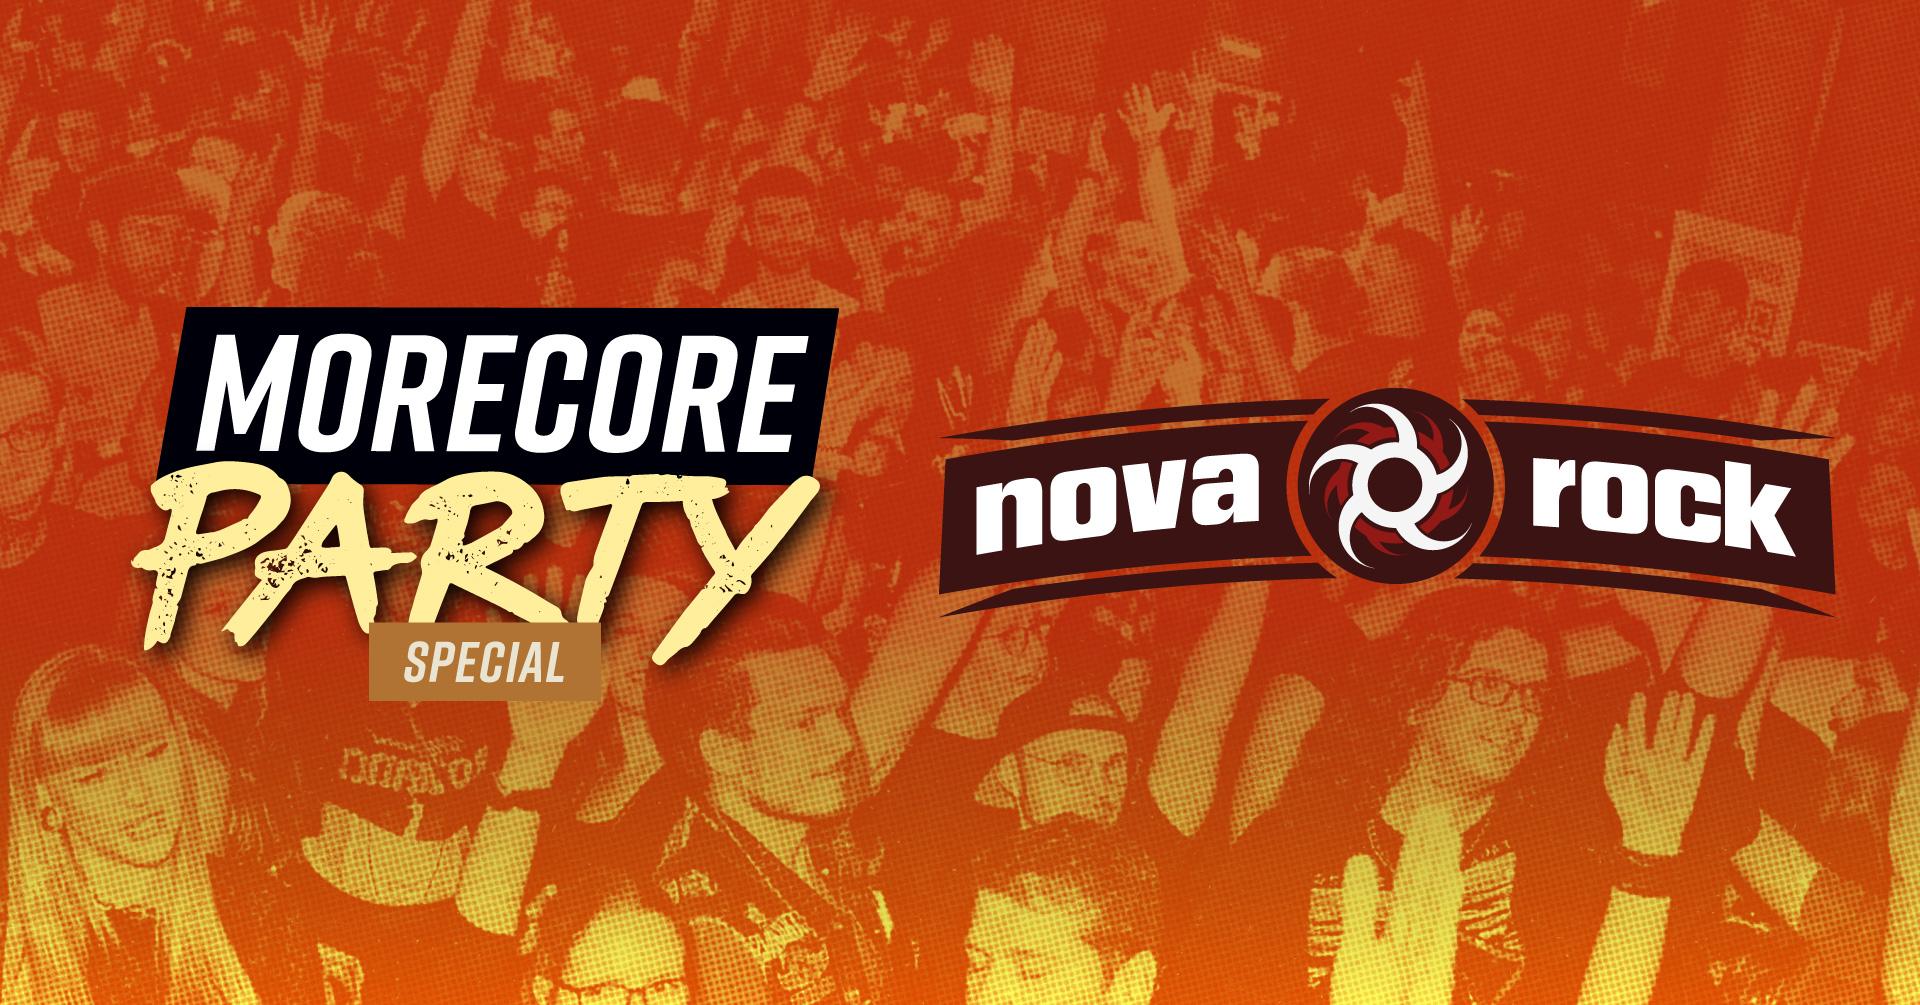 MoreCore Party Wien Nova Rock Special